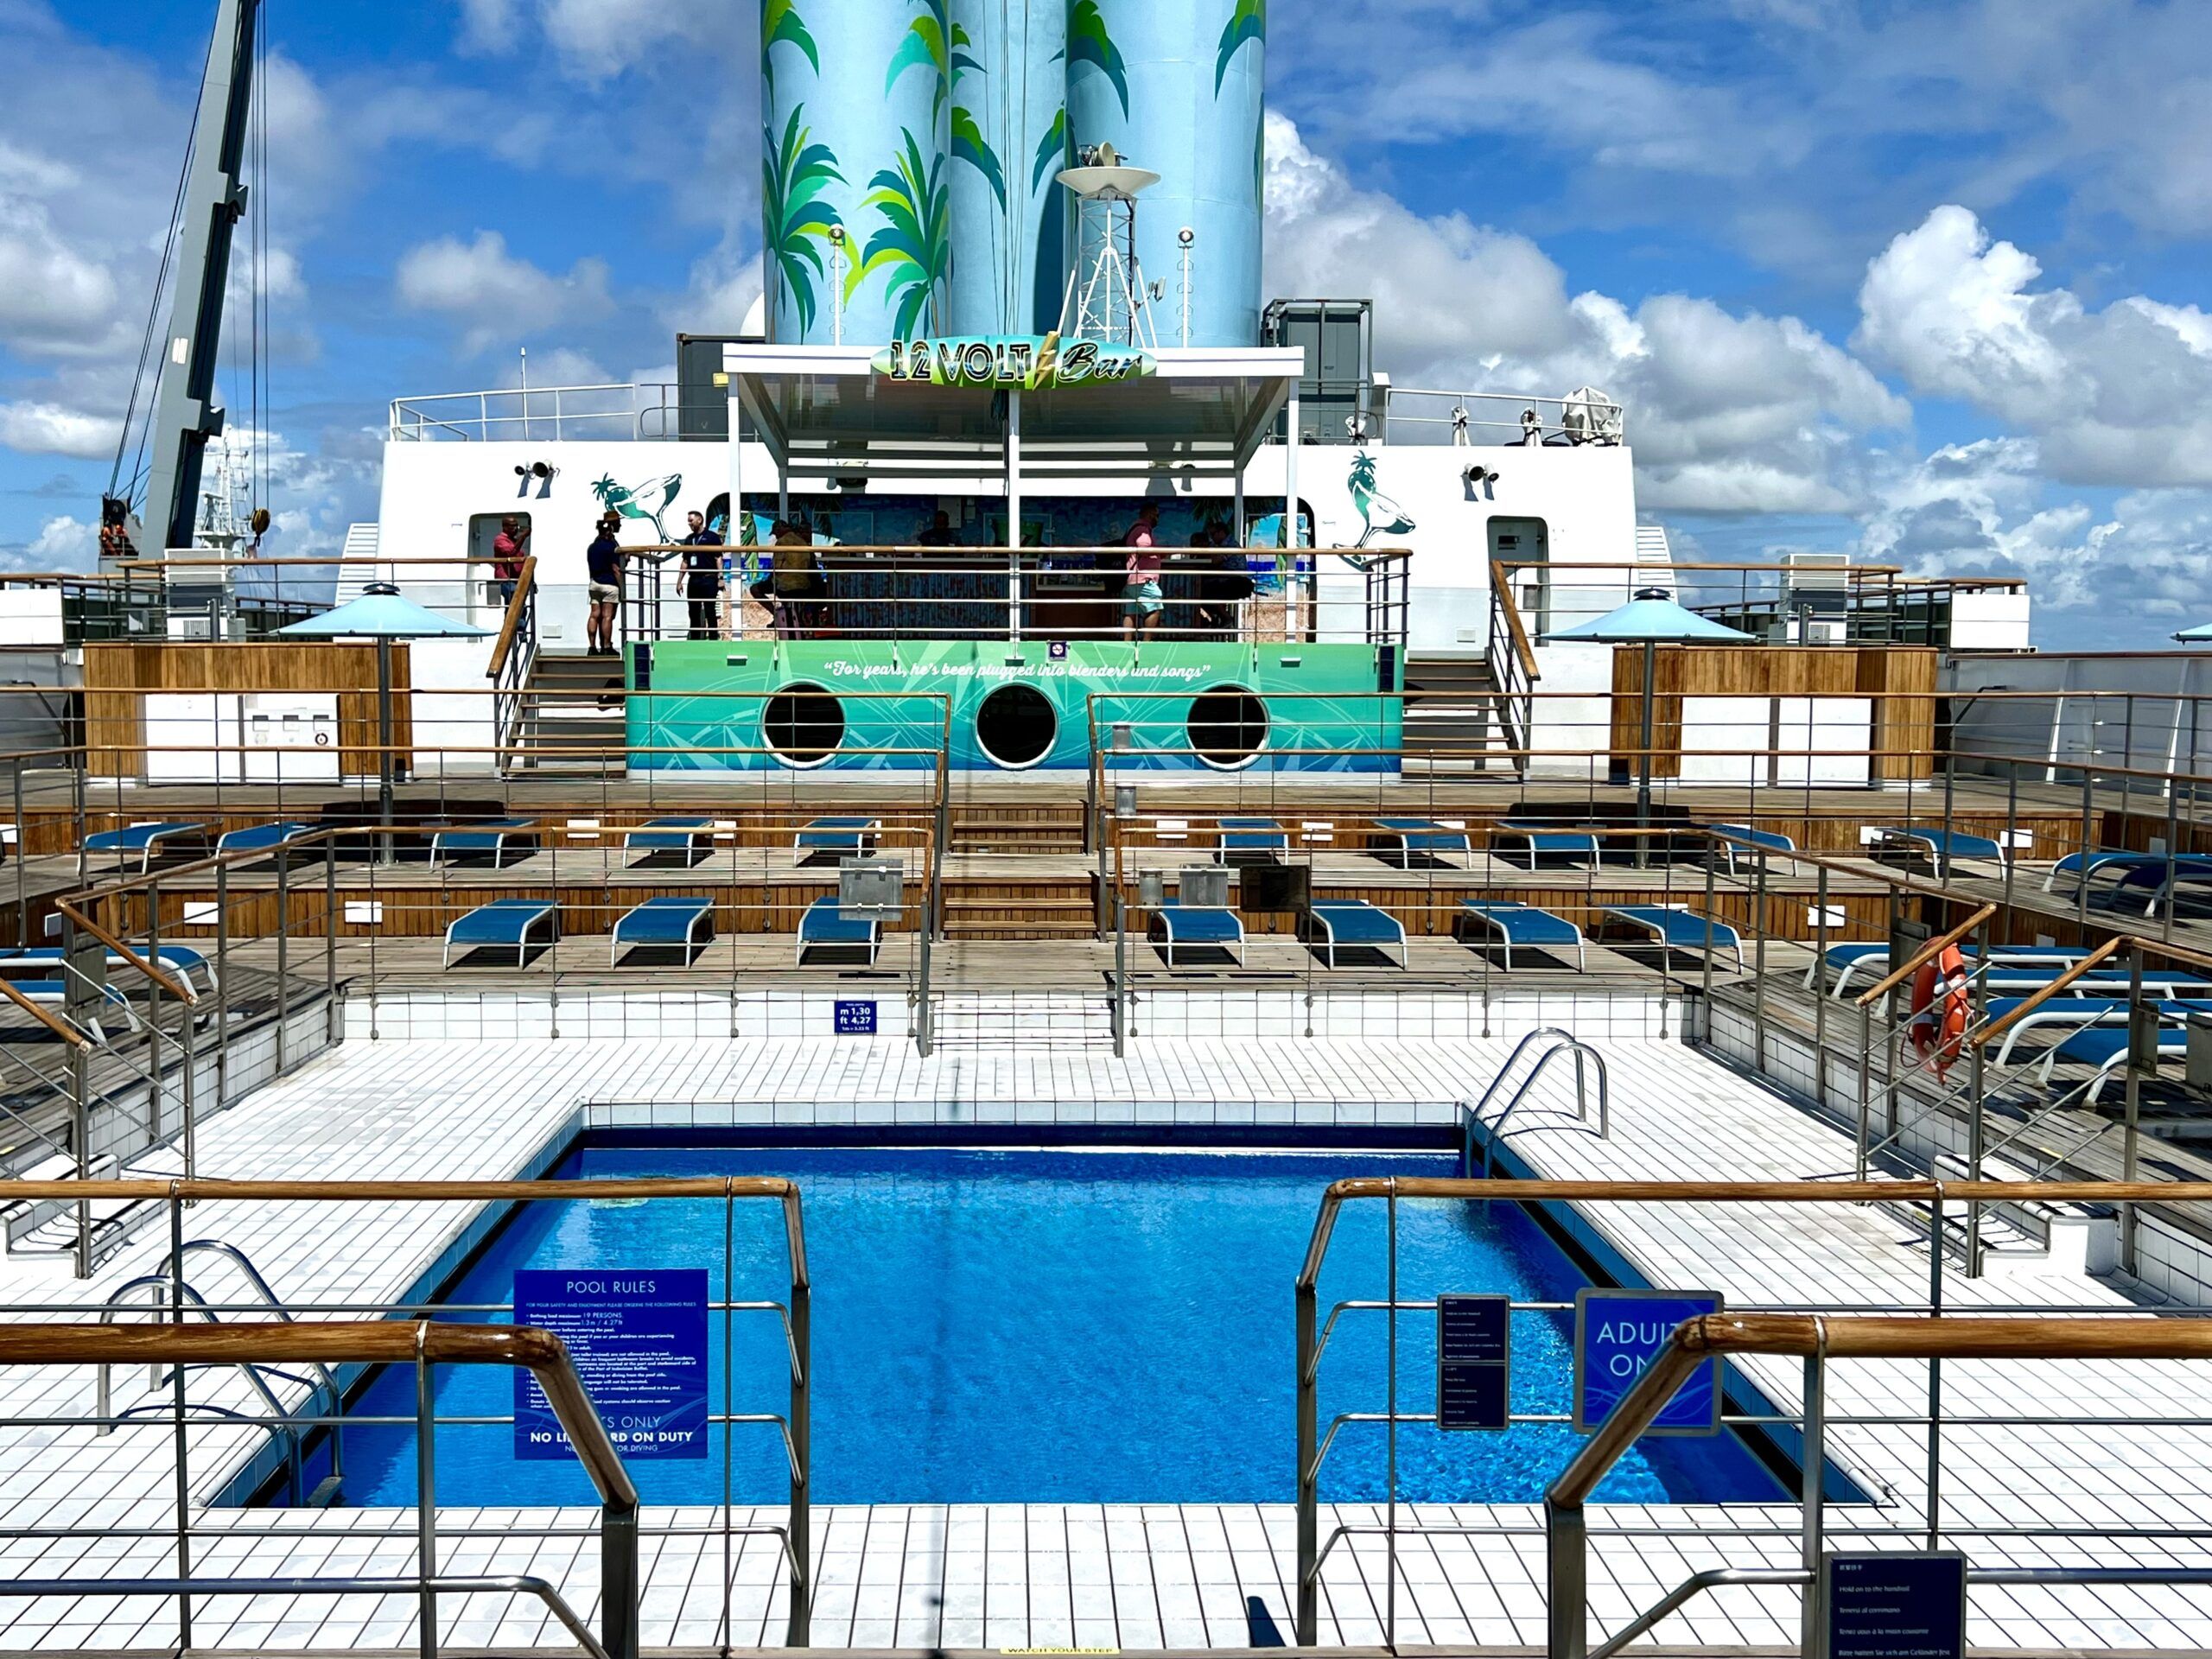 Margaritaville at Sea Inaugural Cruise Review